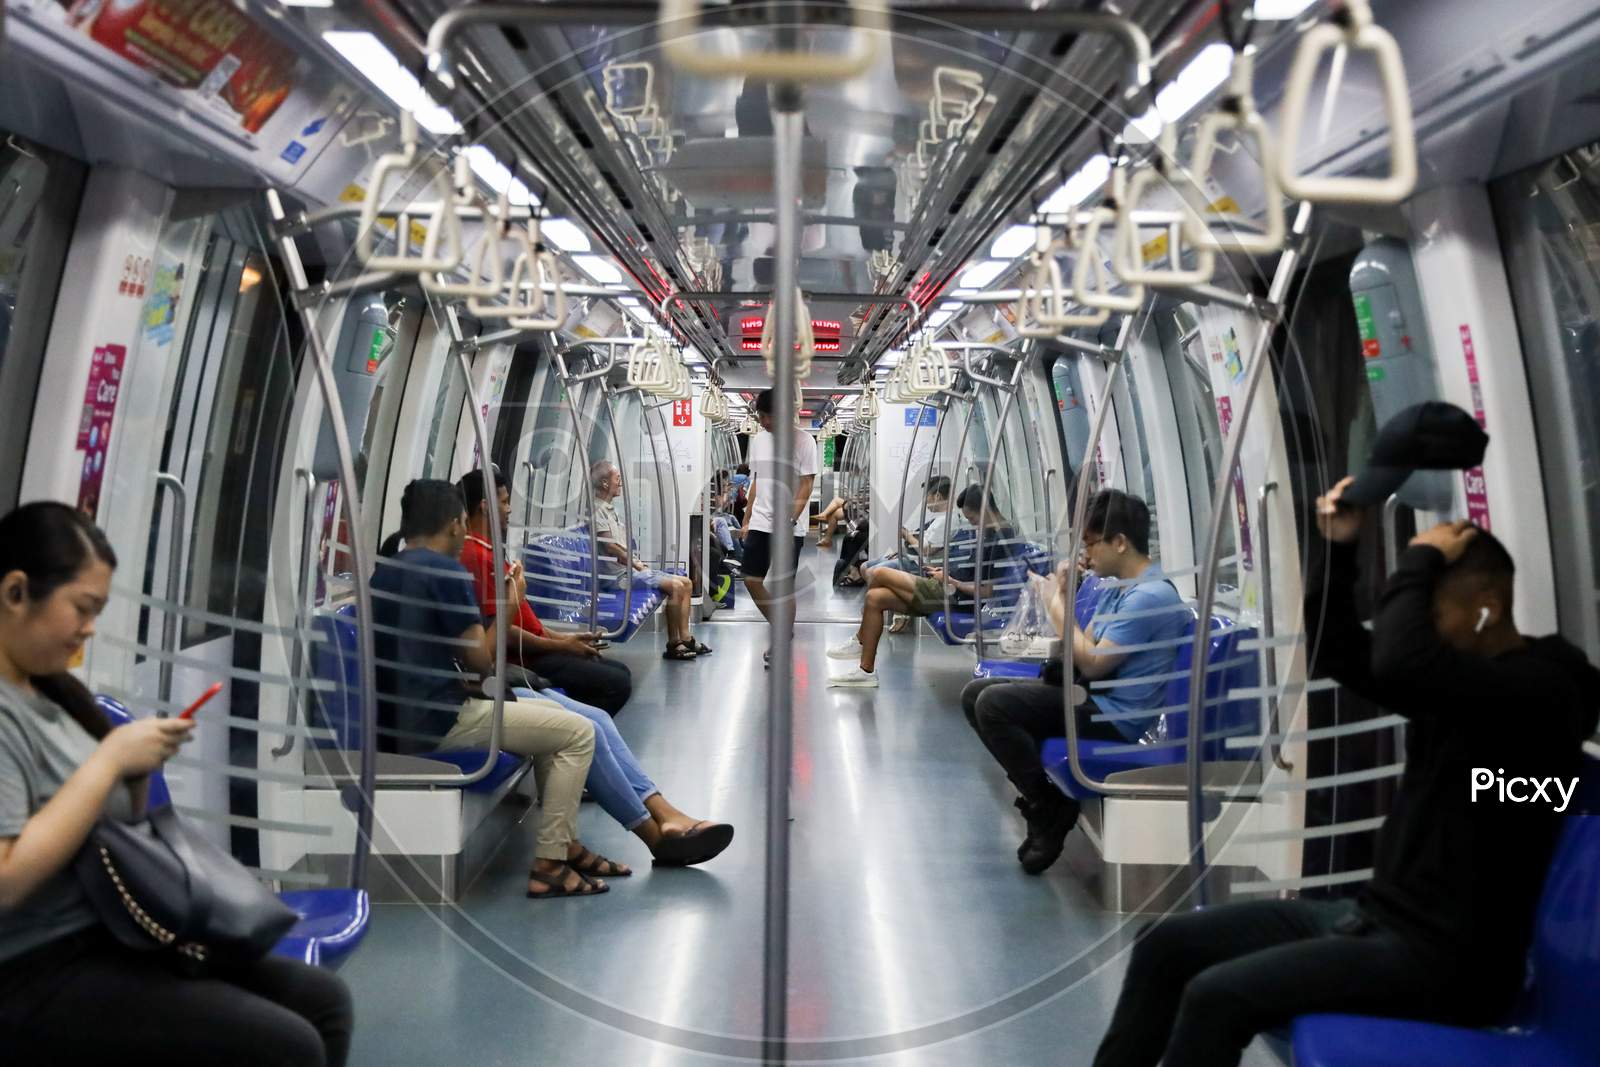 Singapore Metro train with passengers.